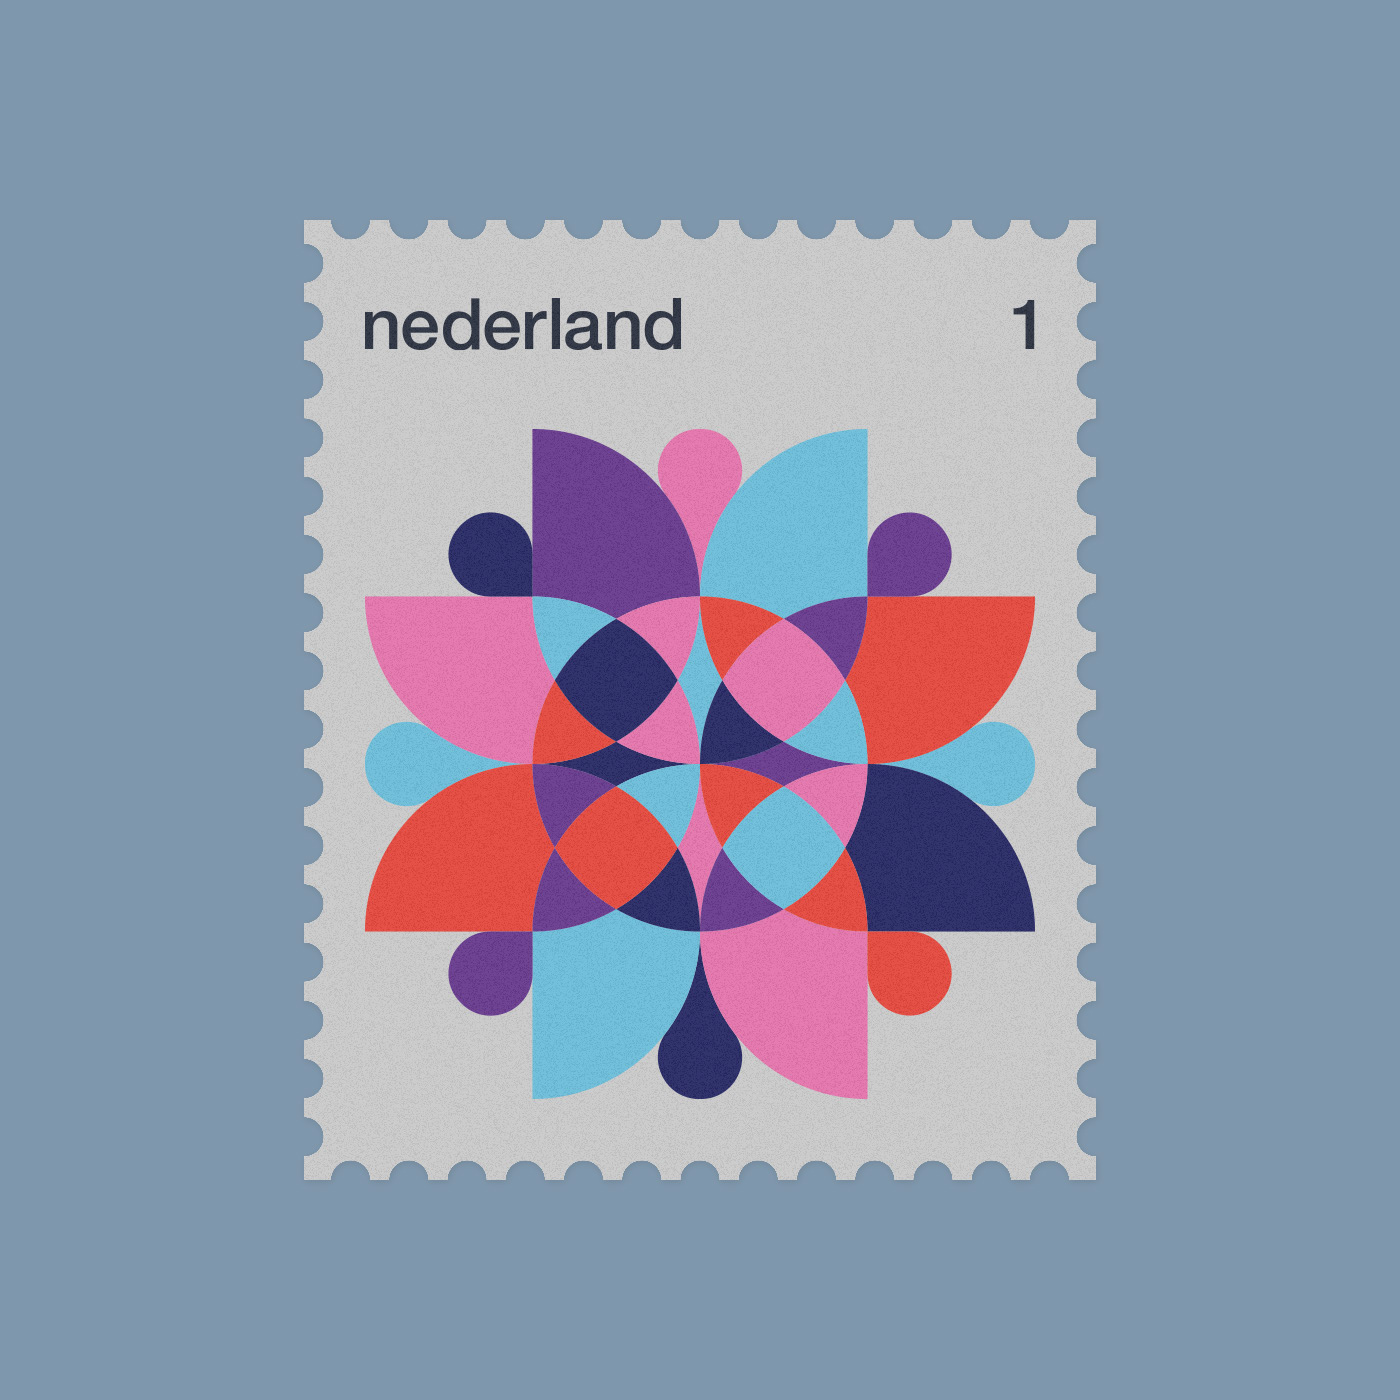 dutch geometric minimal netherland stamp stamps